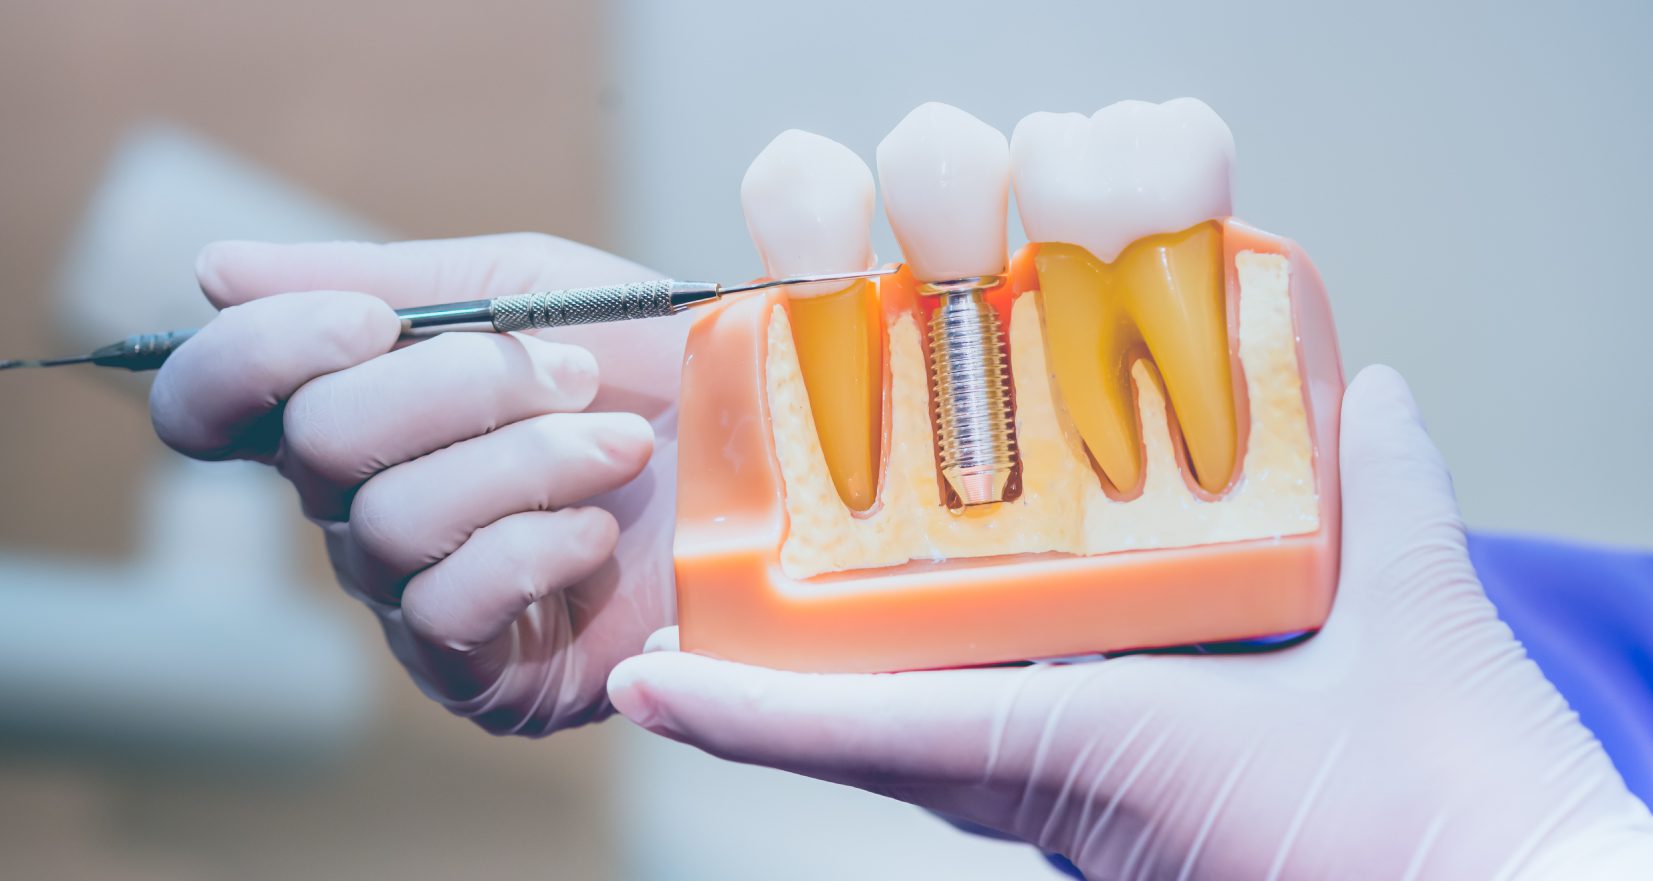 10 Best Dental Implant Marketing Strategies for Dentists [Video]